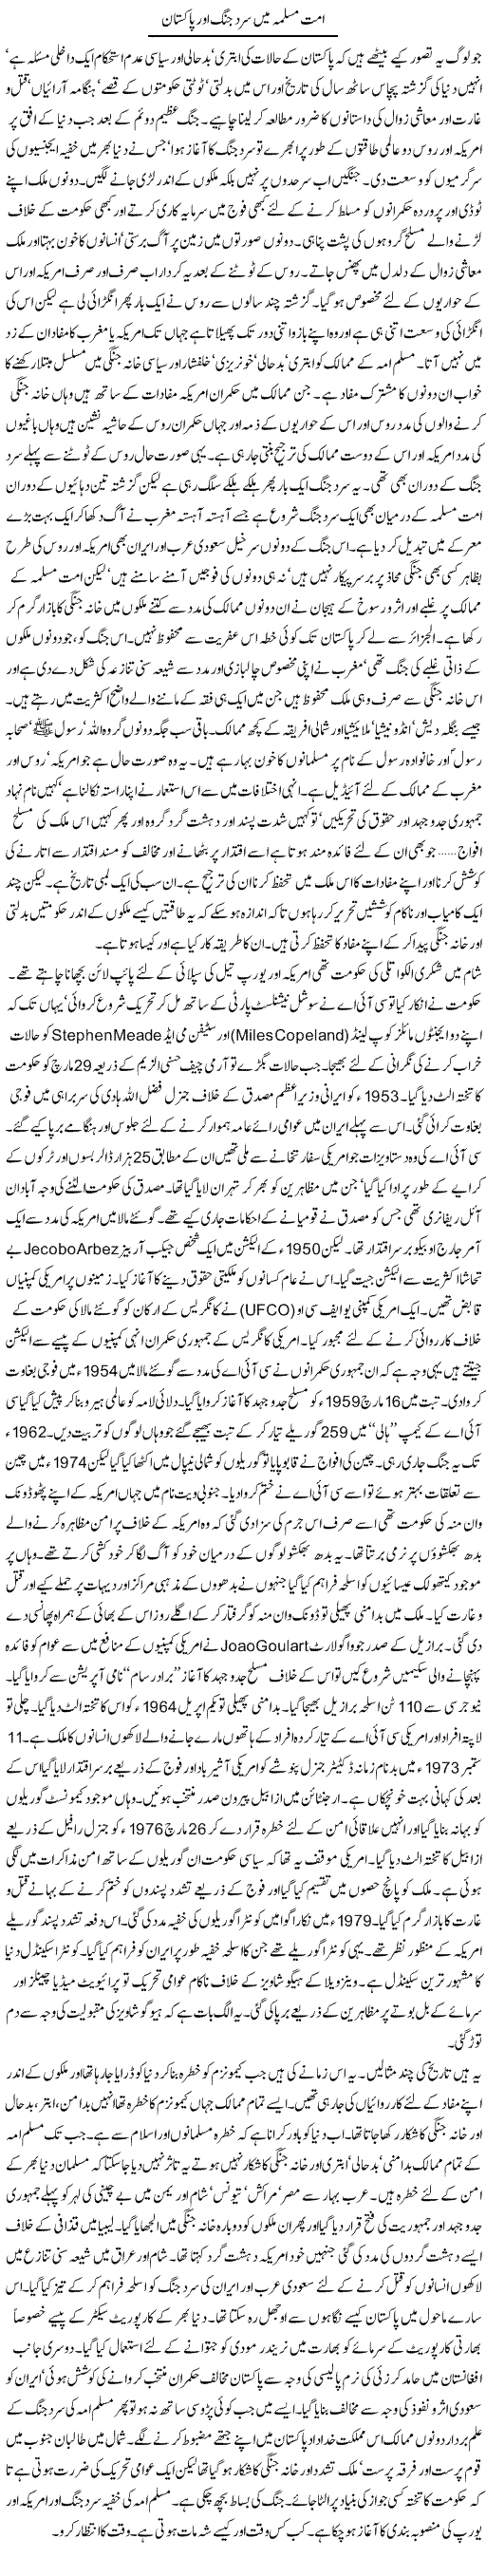 Ummat e Muslima Main Sard Jung Our Pakistan | Orya Maqbool Jan | Daily Urdu Columns